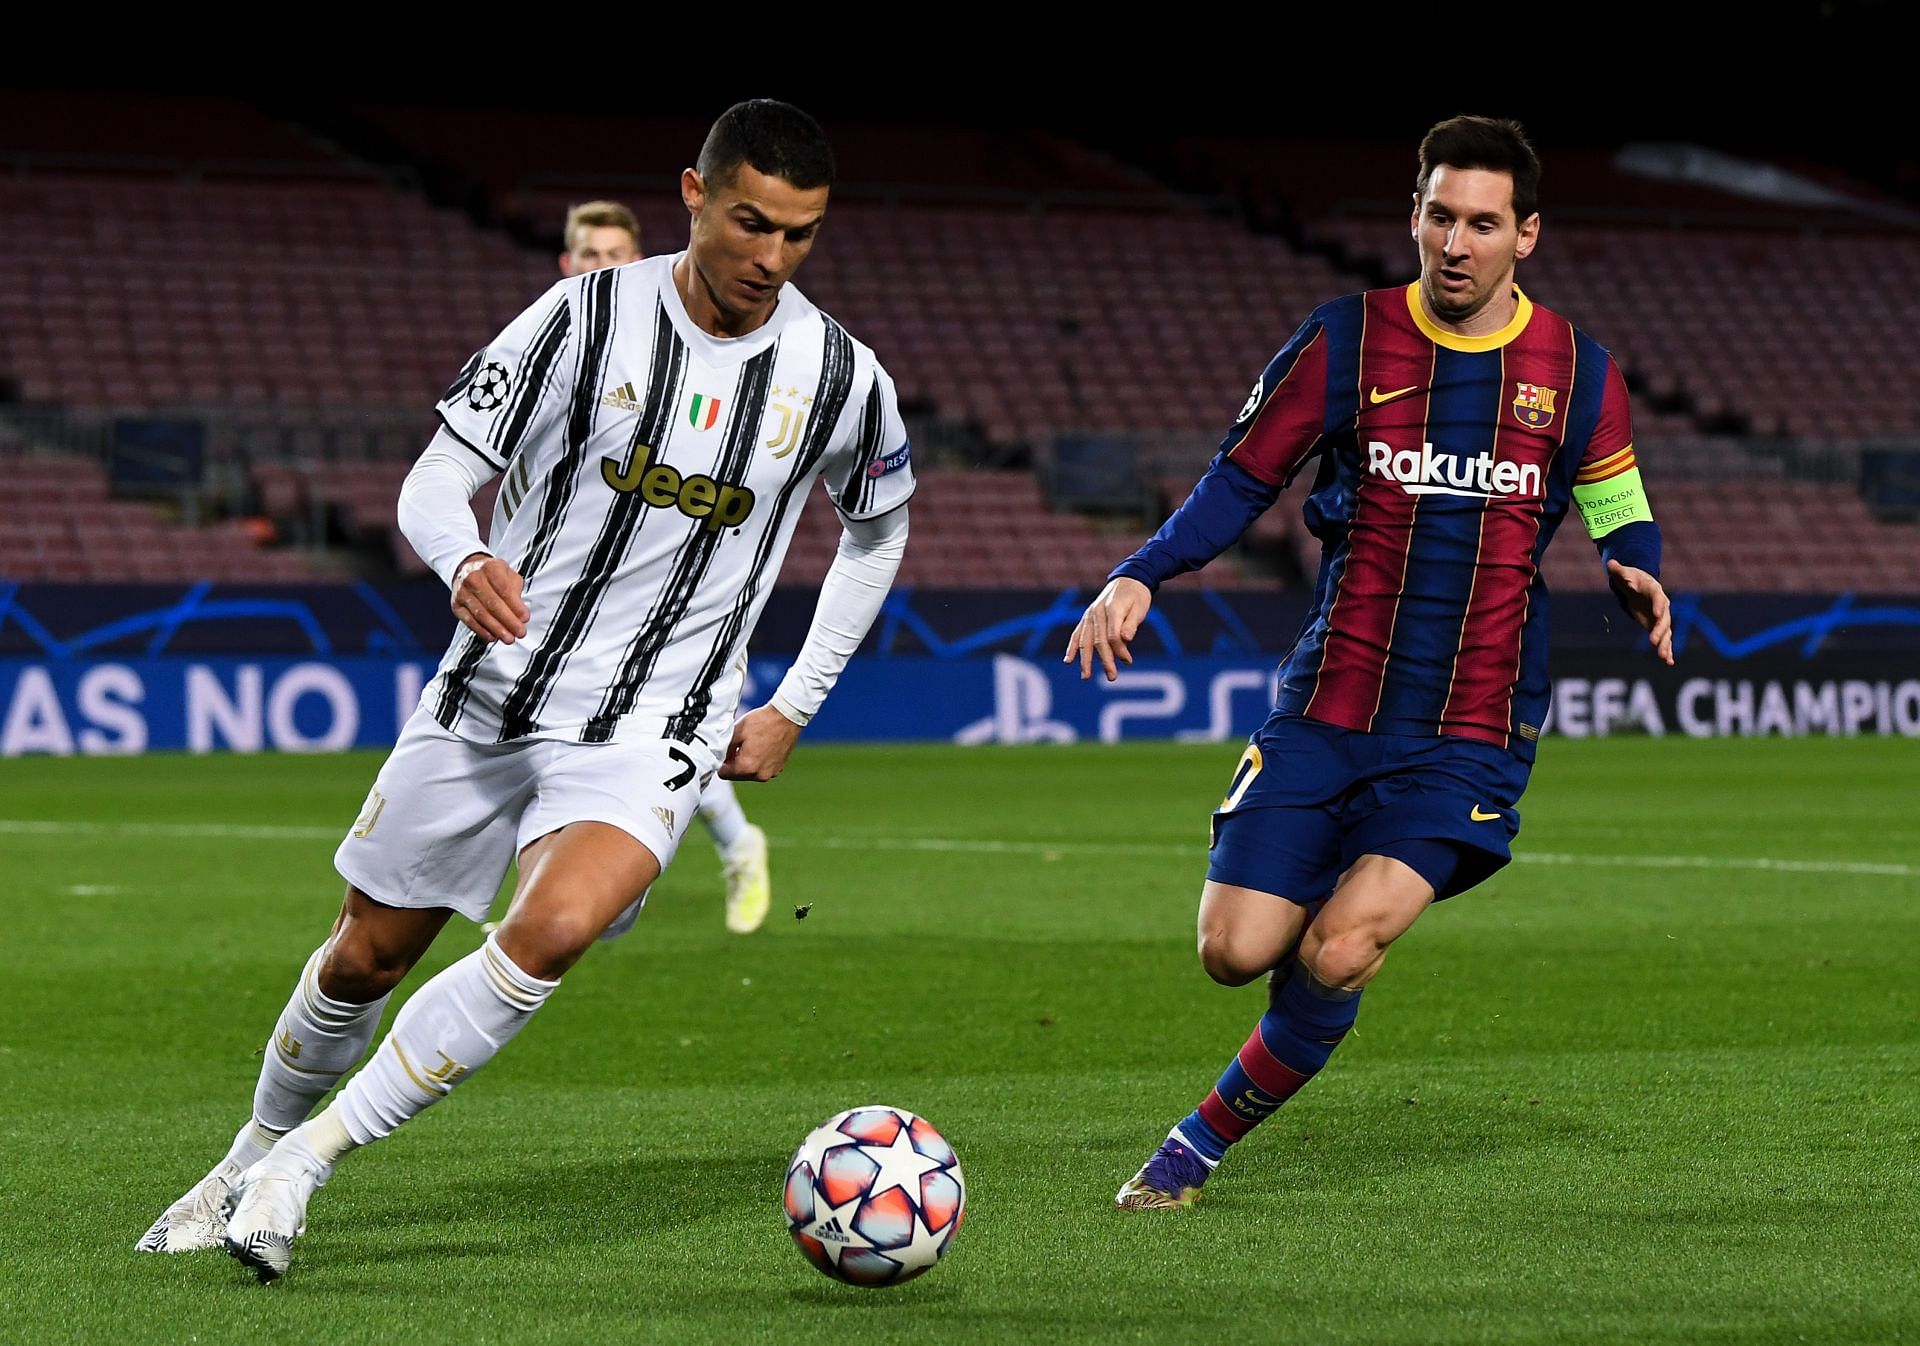 Cristinao Ronaldo (left) and Lionel Messi